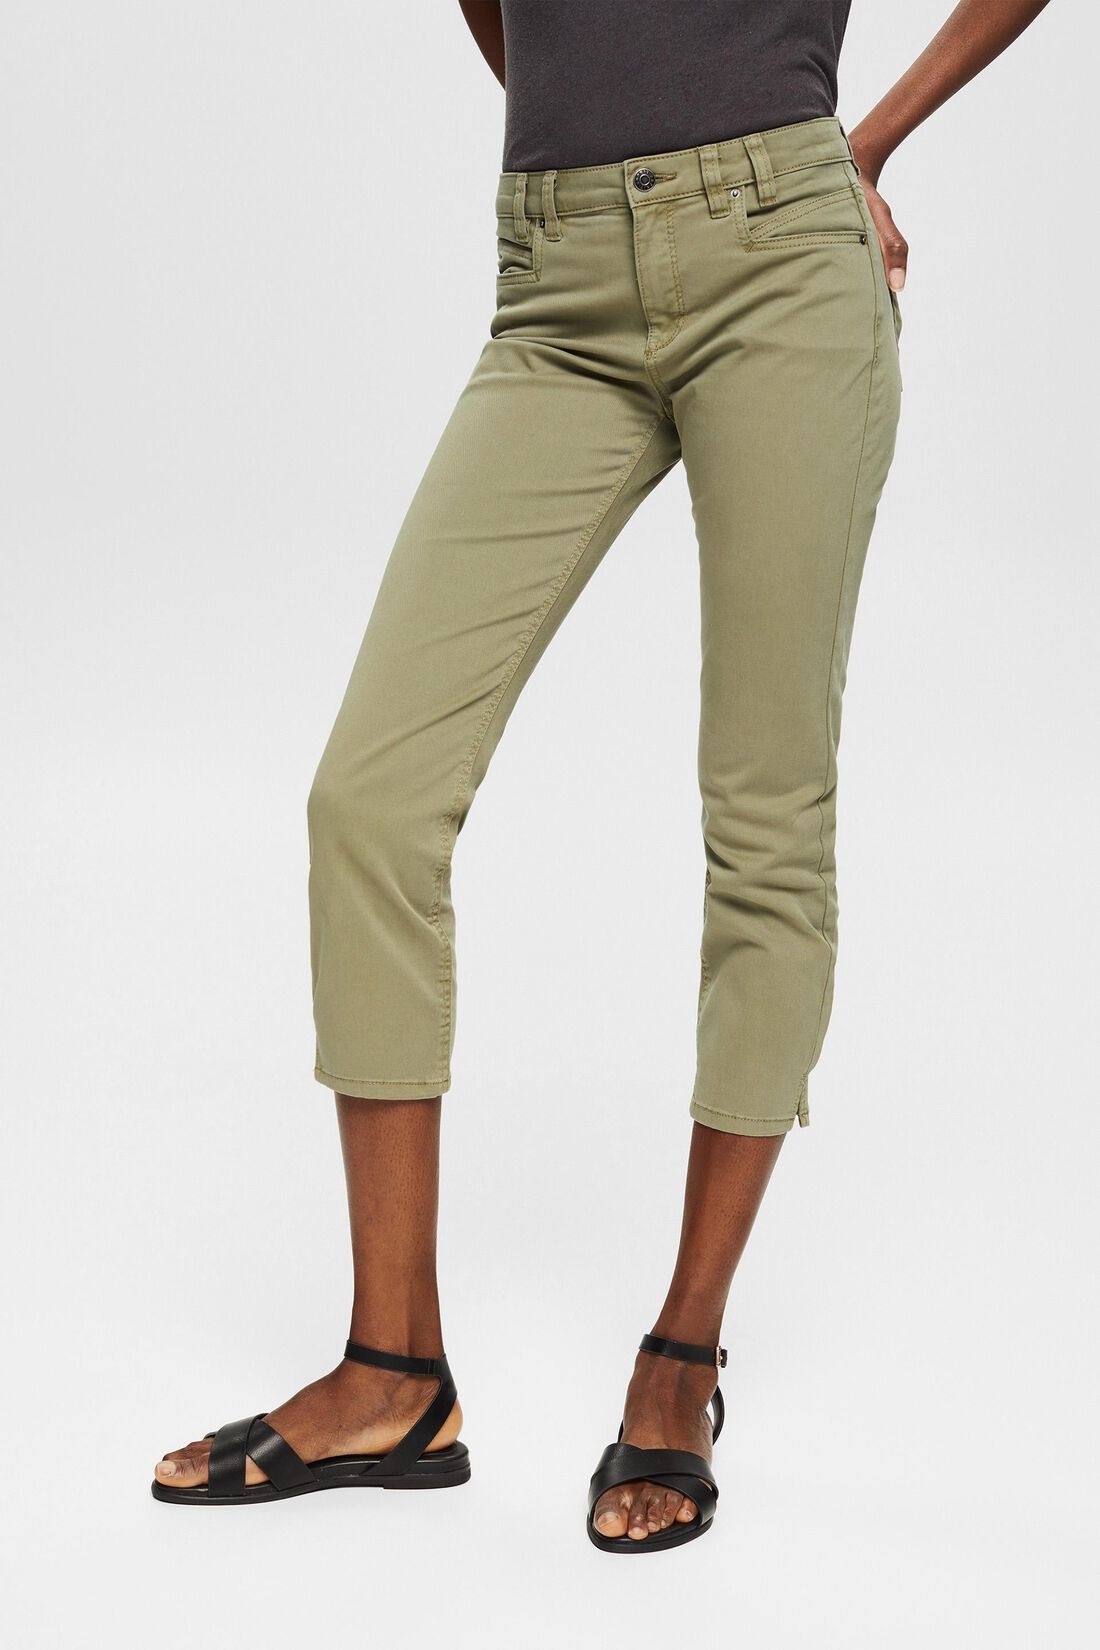 ESPRIT Stretch Pants Capri-Length - Light Khaki / Green